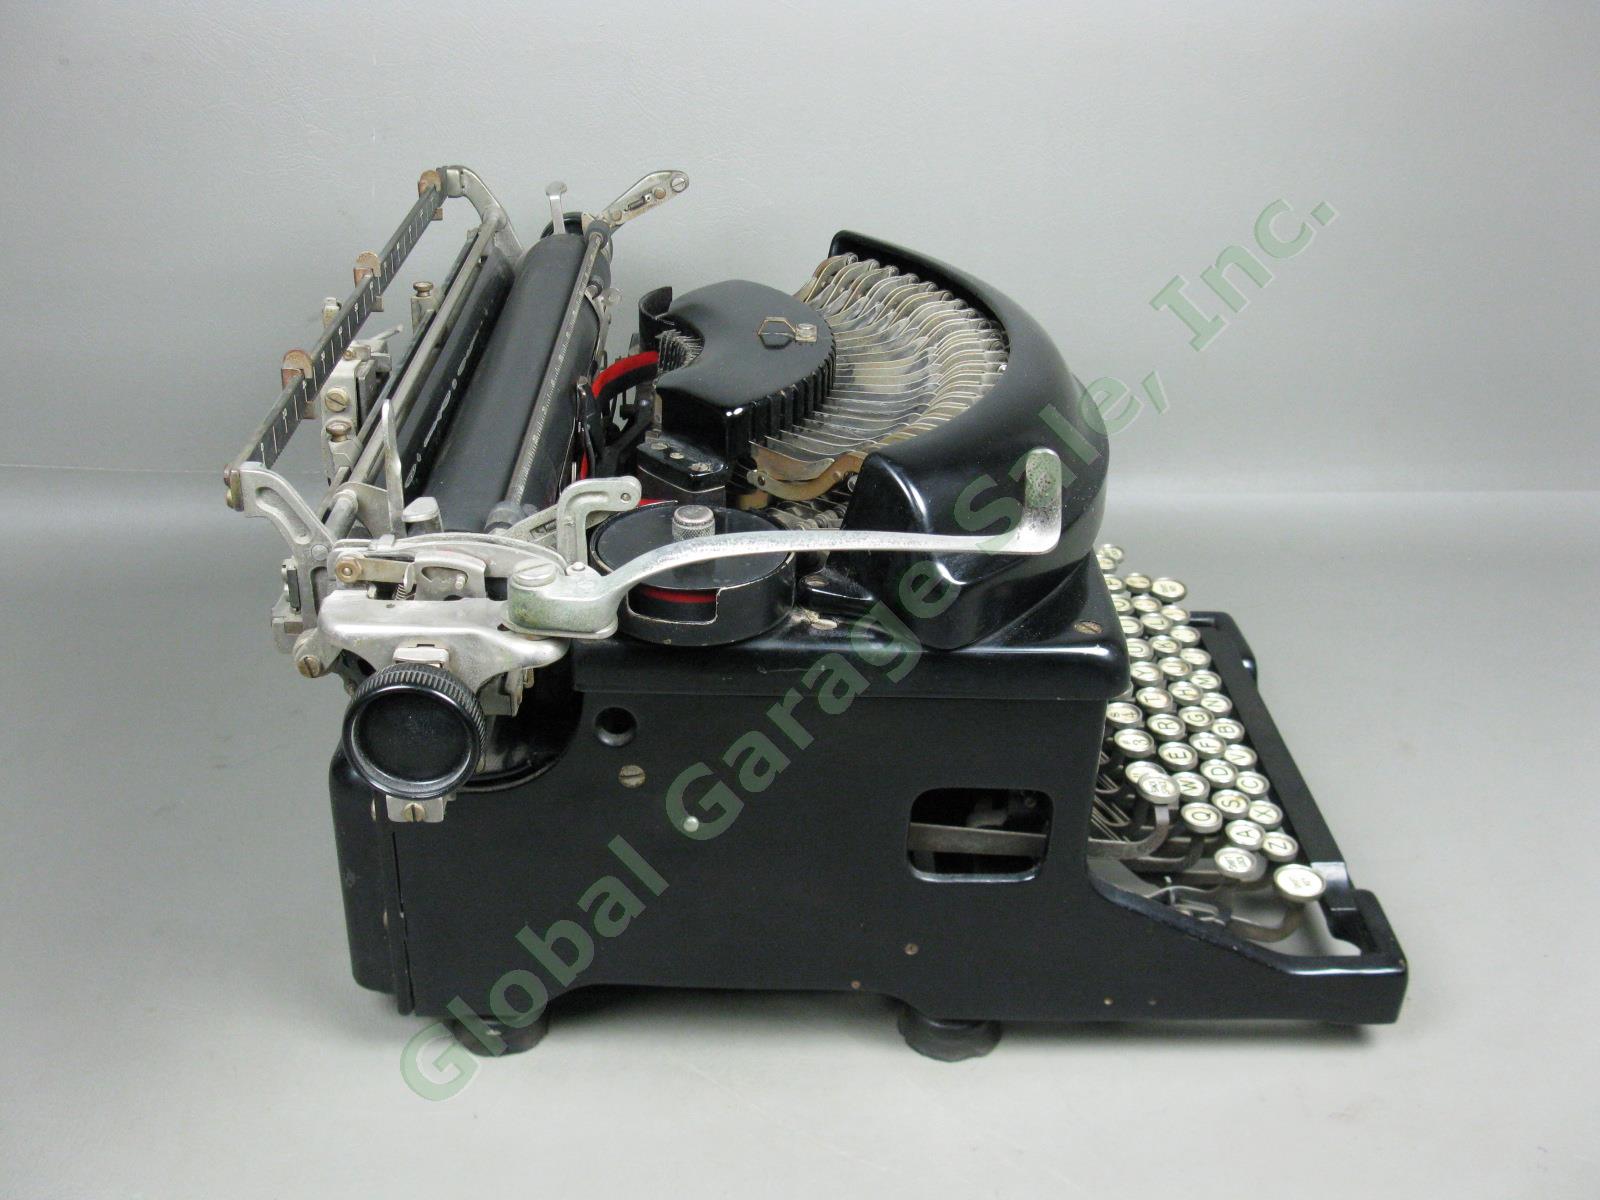 Vtg Antique 1929 Remington Noiseless 6 Manual Typewriter Serial X117909 Cleaned 6